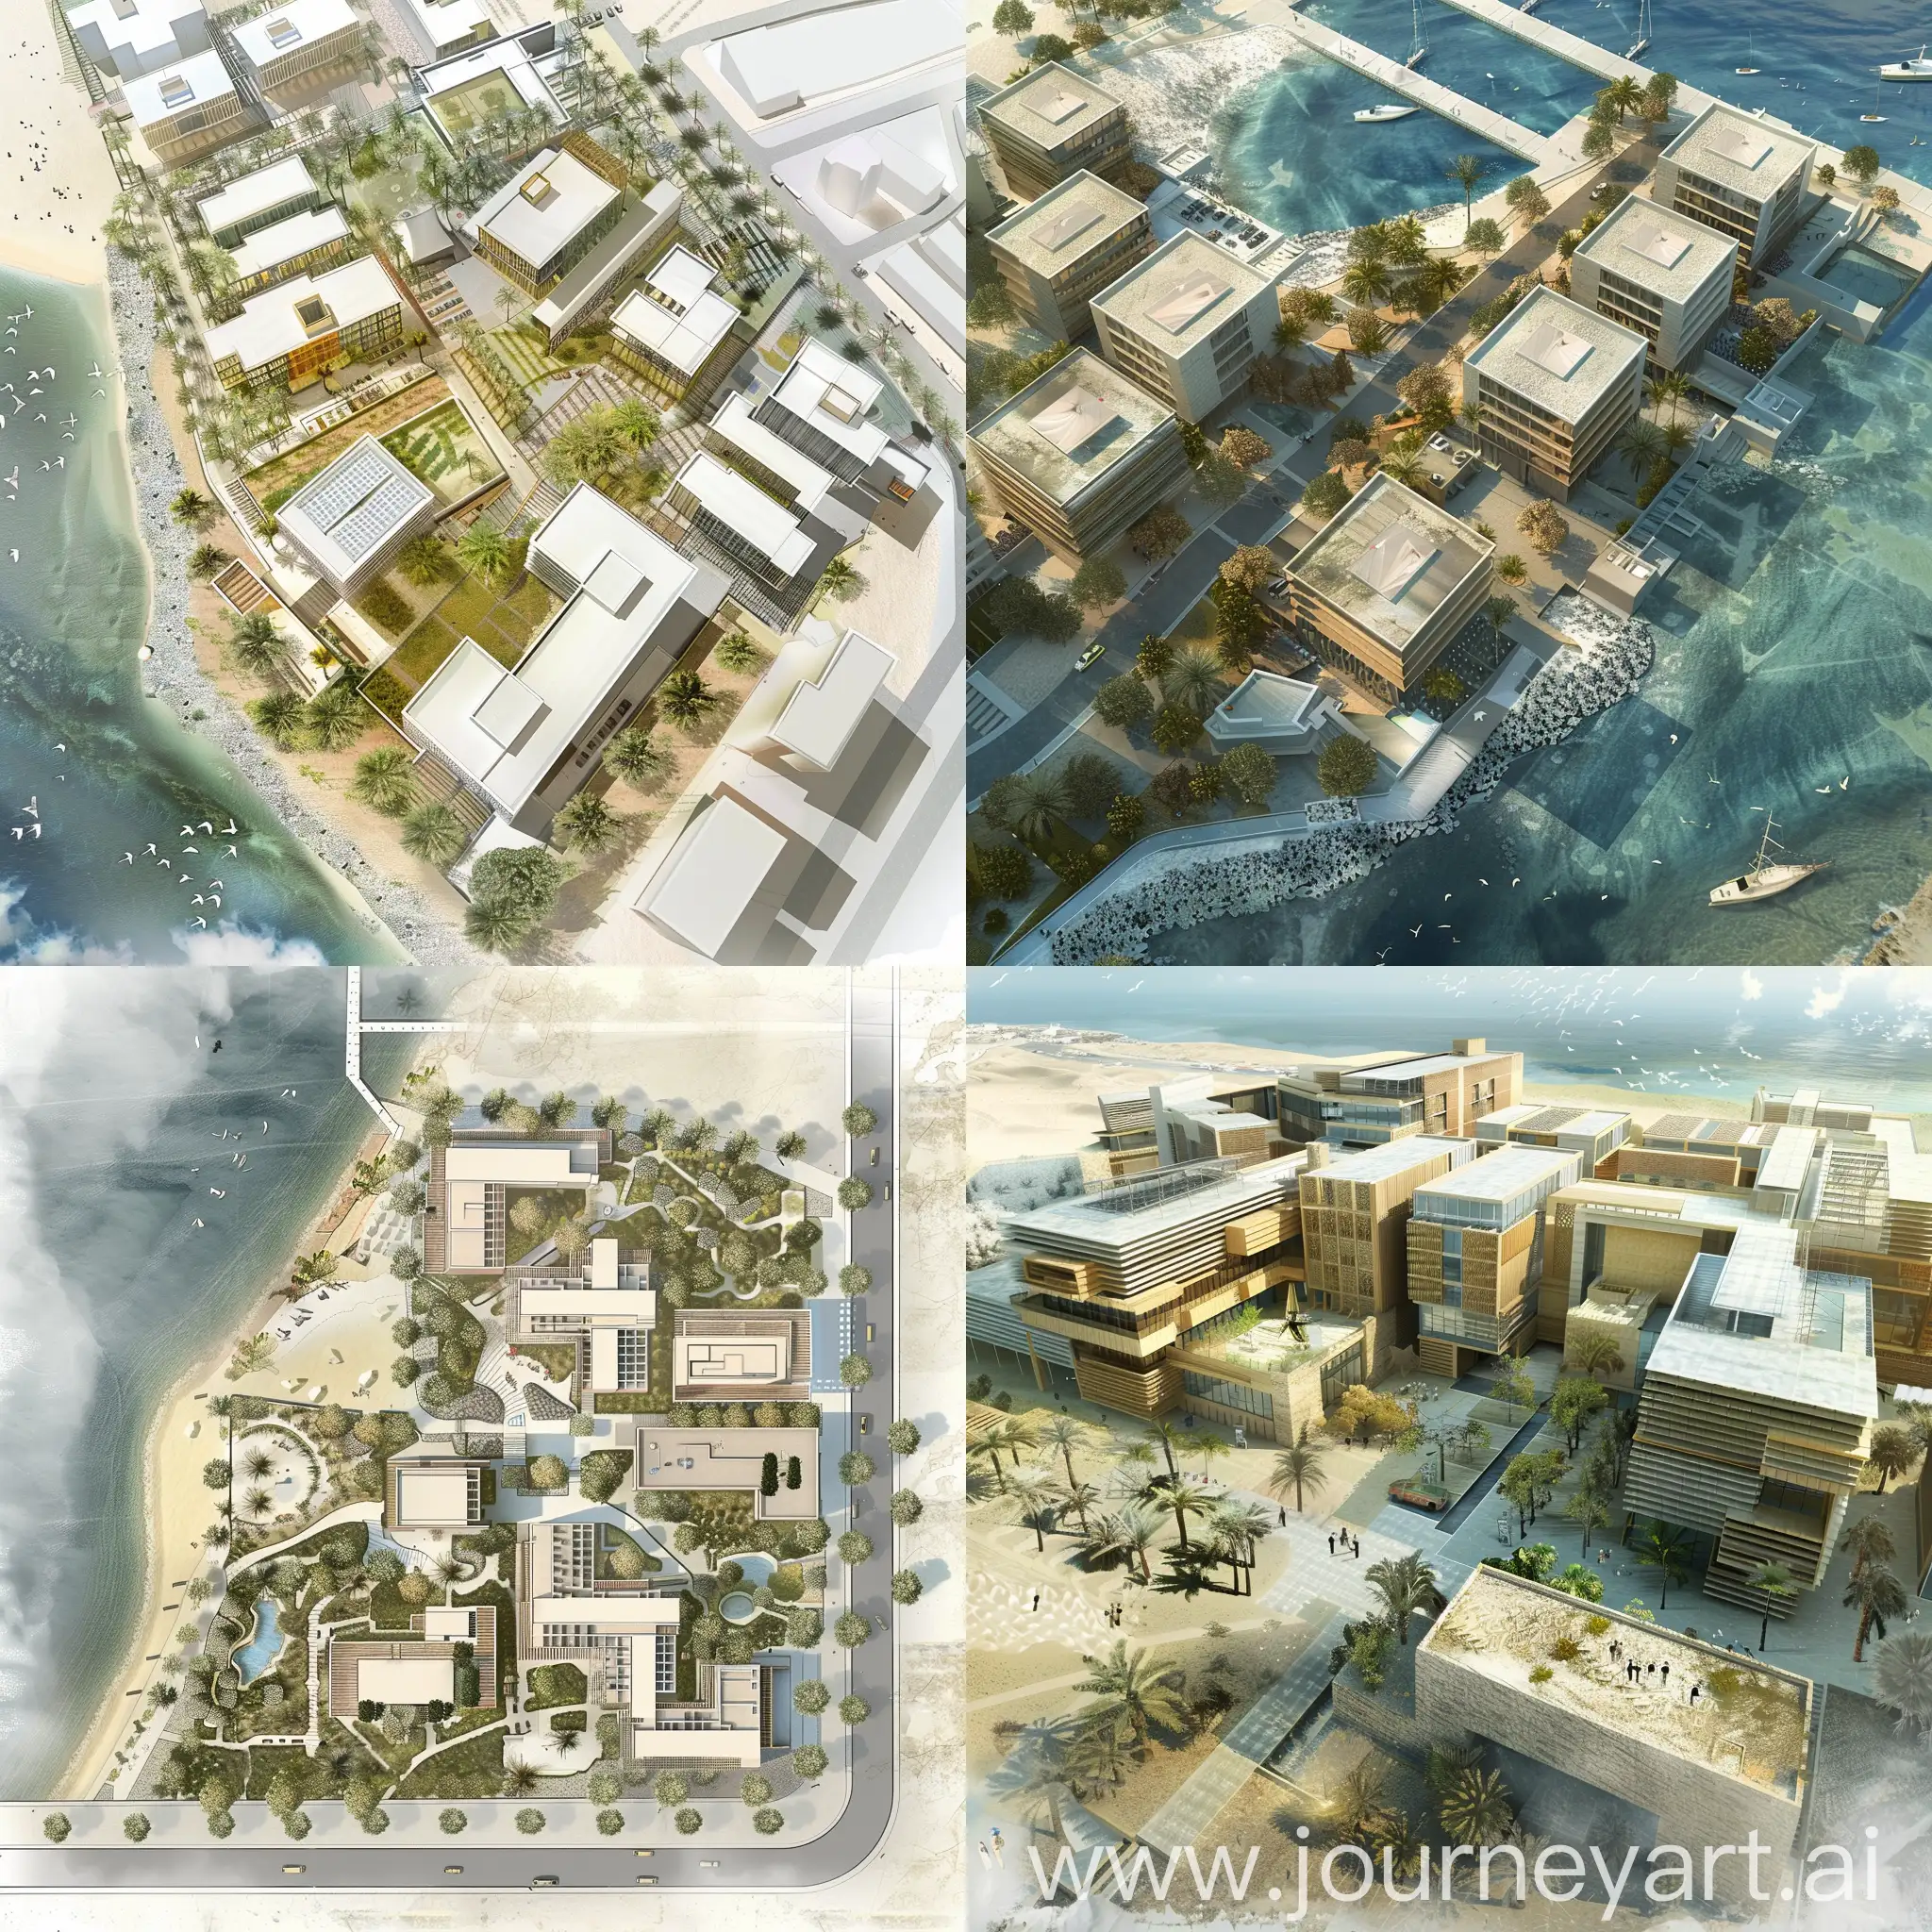 MaritimeInspired-Business-Park-Architectural-Plan-in-El-Quseir